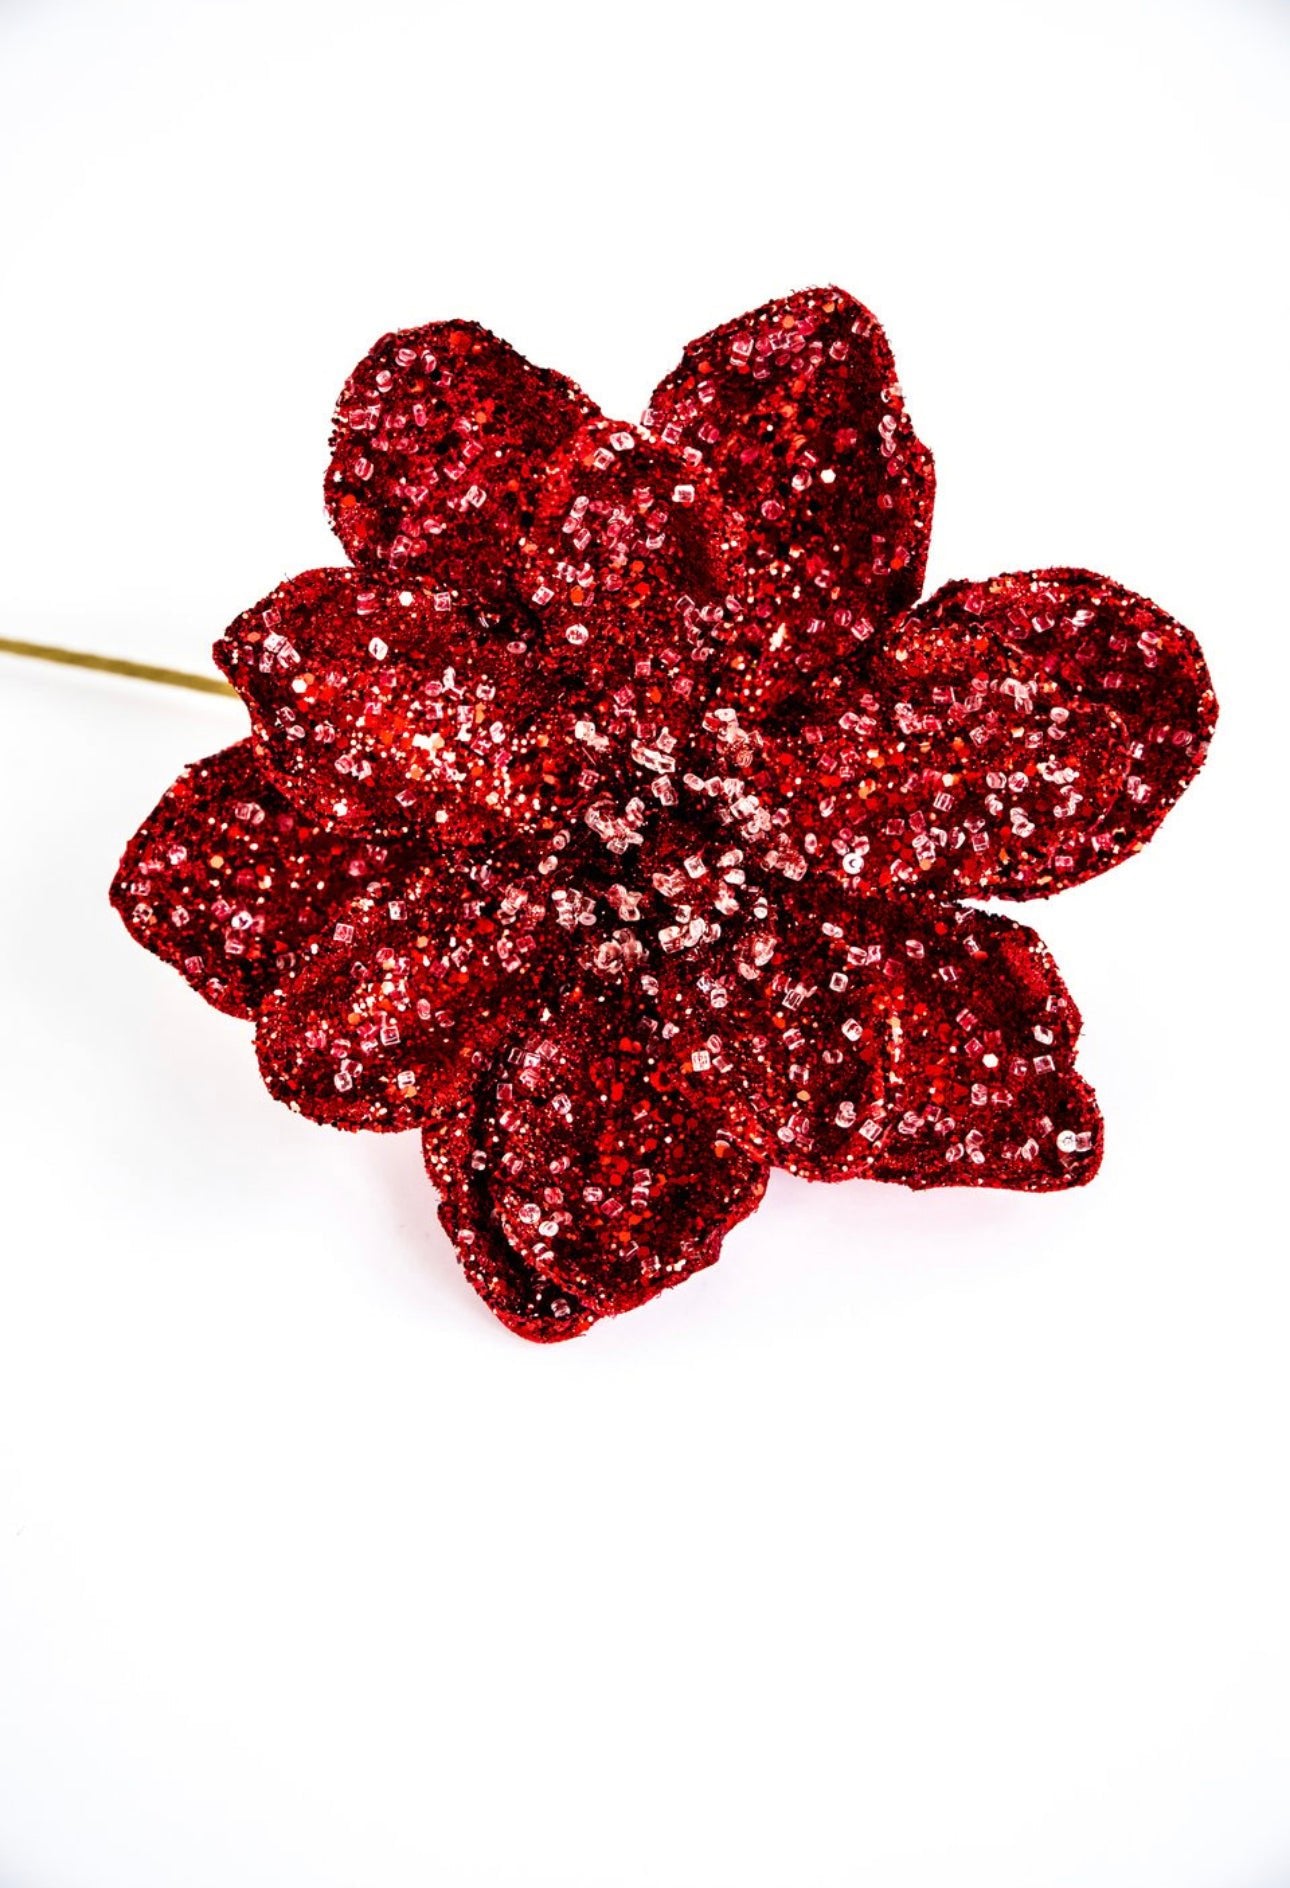 Jeweled and beaded magnolia stem - red - Greenery MarketXg903-R